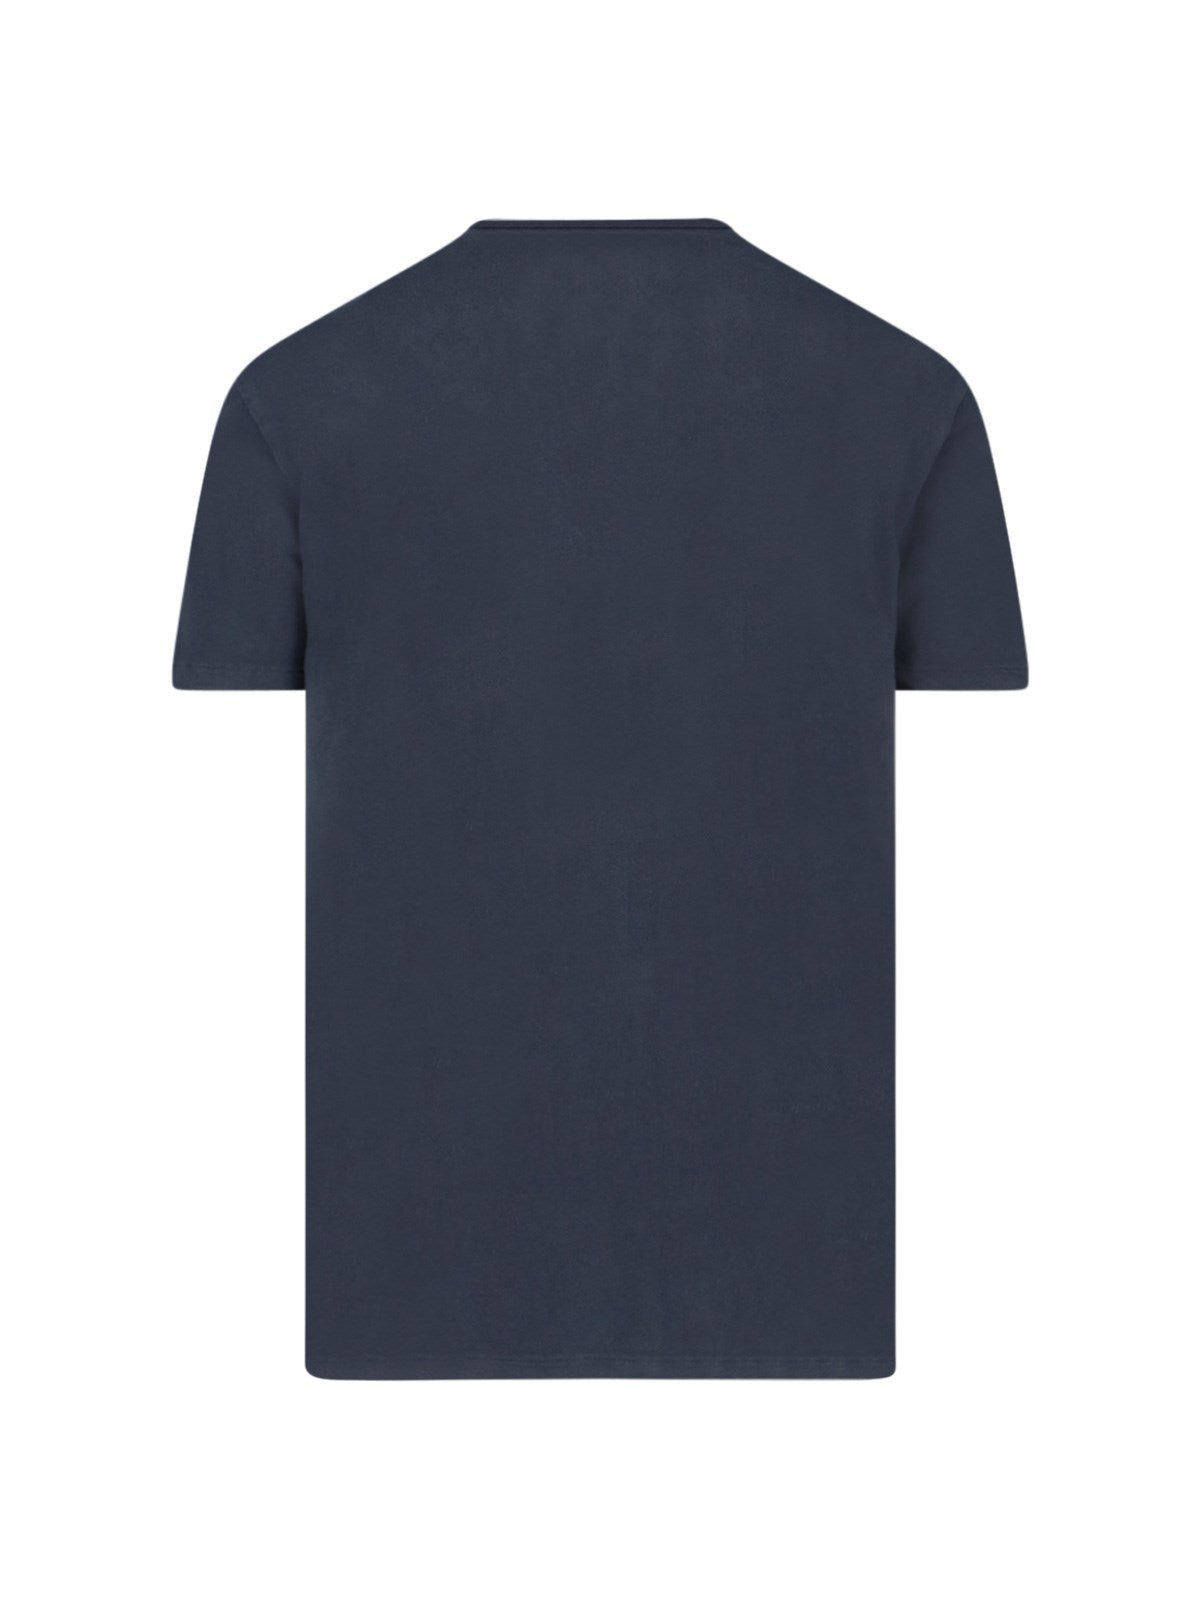 Polo Ralph Lauren T-Shirt logo-t-shirt-Polo Ralph Lauren-T-shirt logo Polo Ralph Lauren, in cotone blu, girocollo, maniche corte, ricamo logo bianco petto, orlo dritto.-Dresso